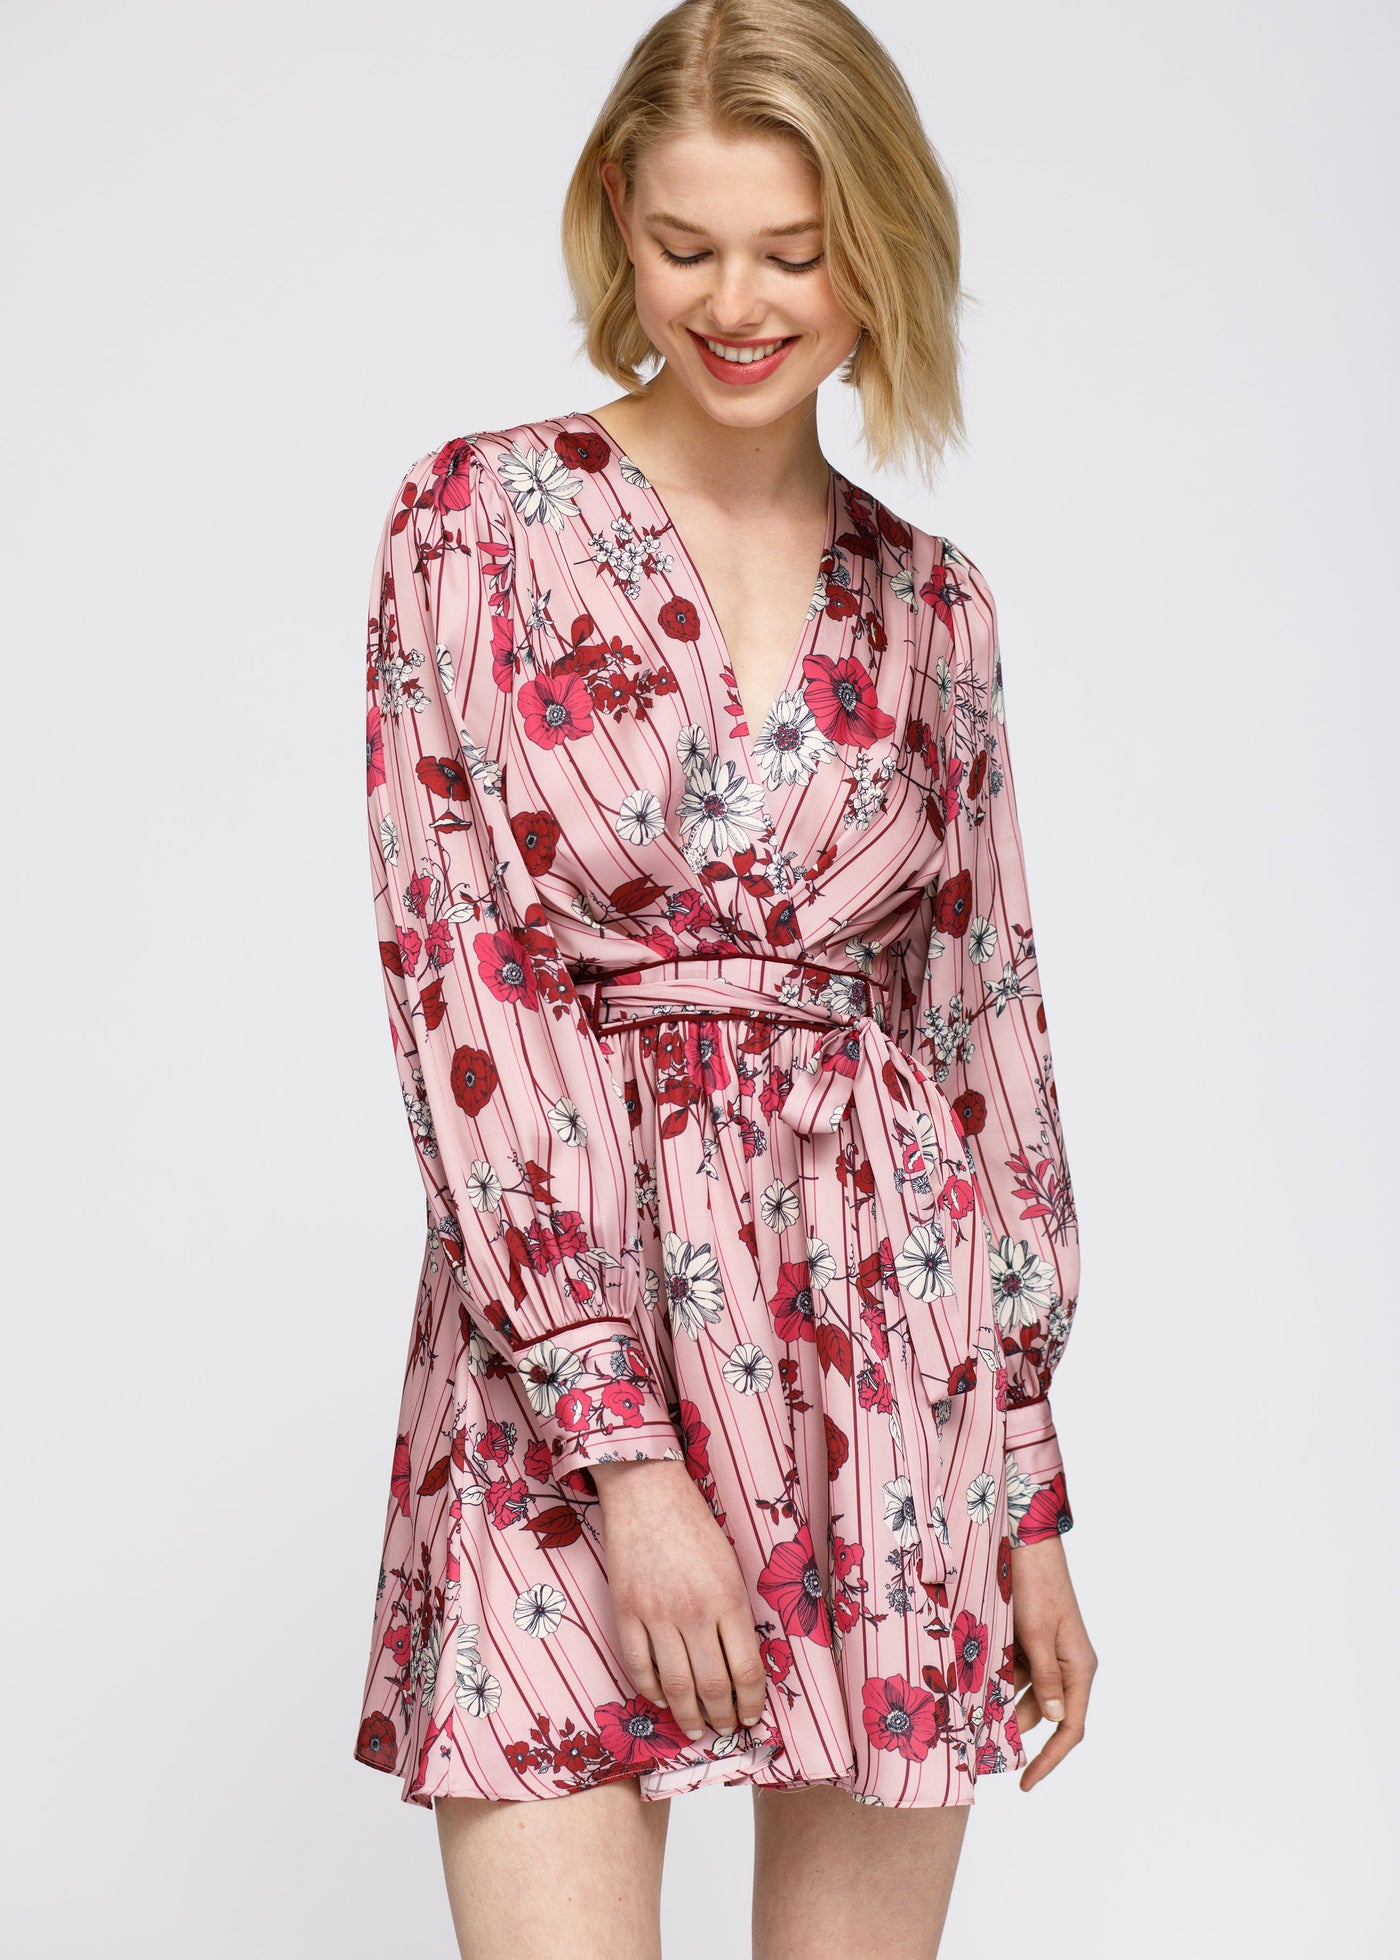 Pajama floral Satin Wrap Front Flared Dress by Shop at Konus